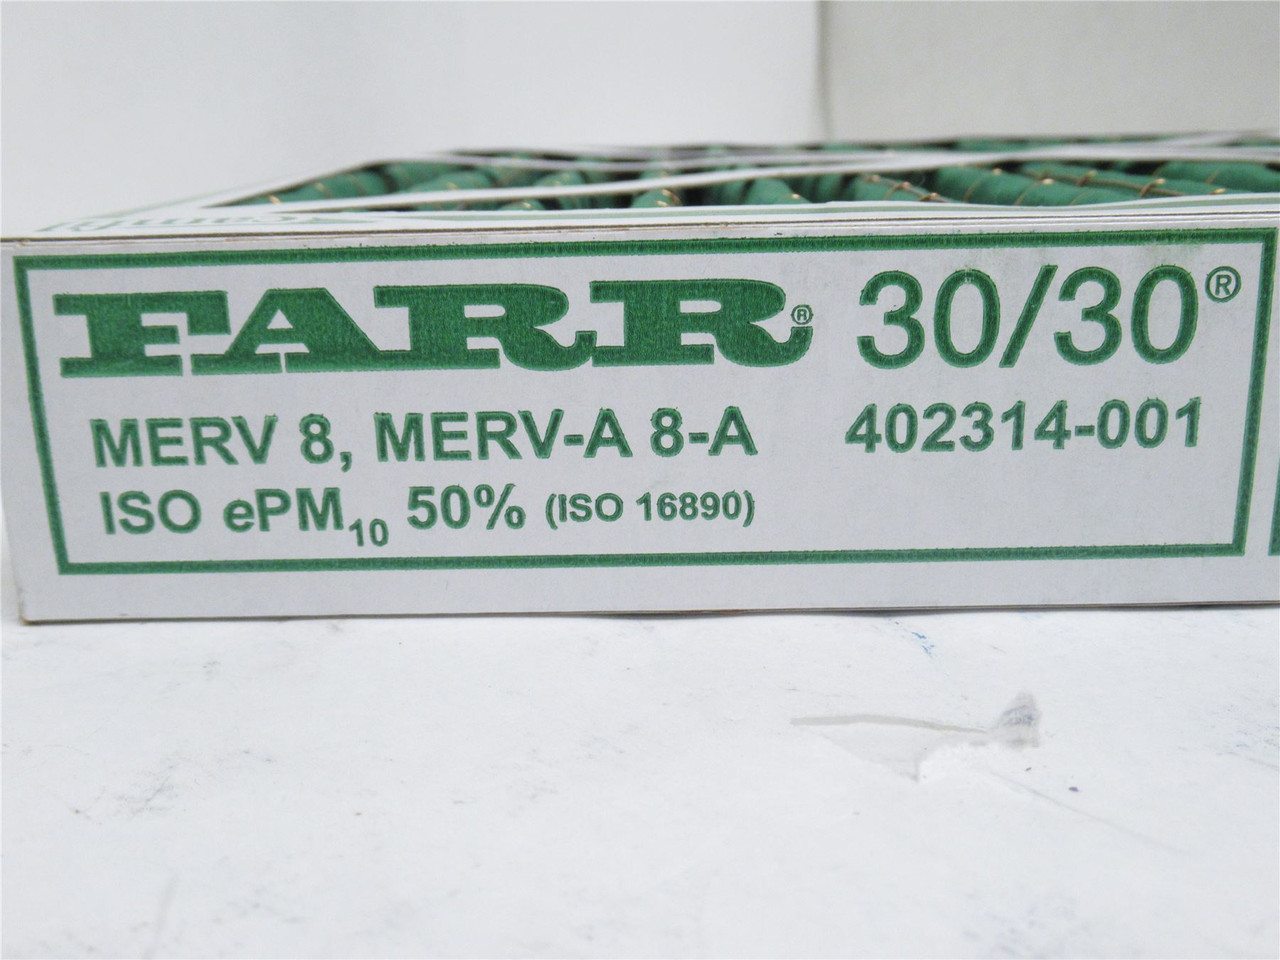 Camfil 402314-001; Lot-12 Air Filter 30/30; 12"x12"x2" MERV 8